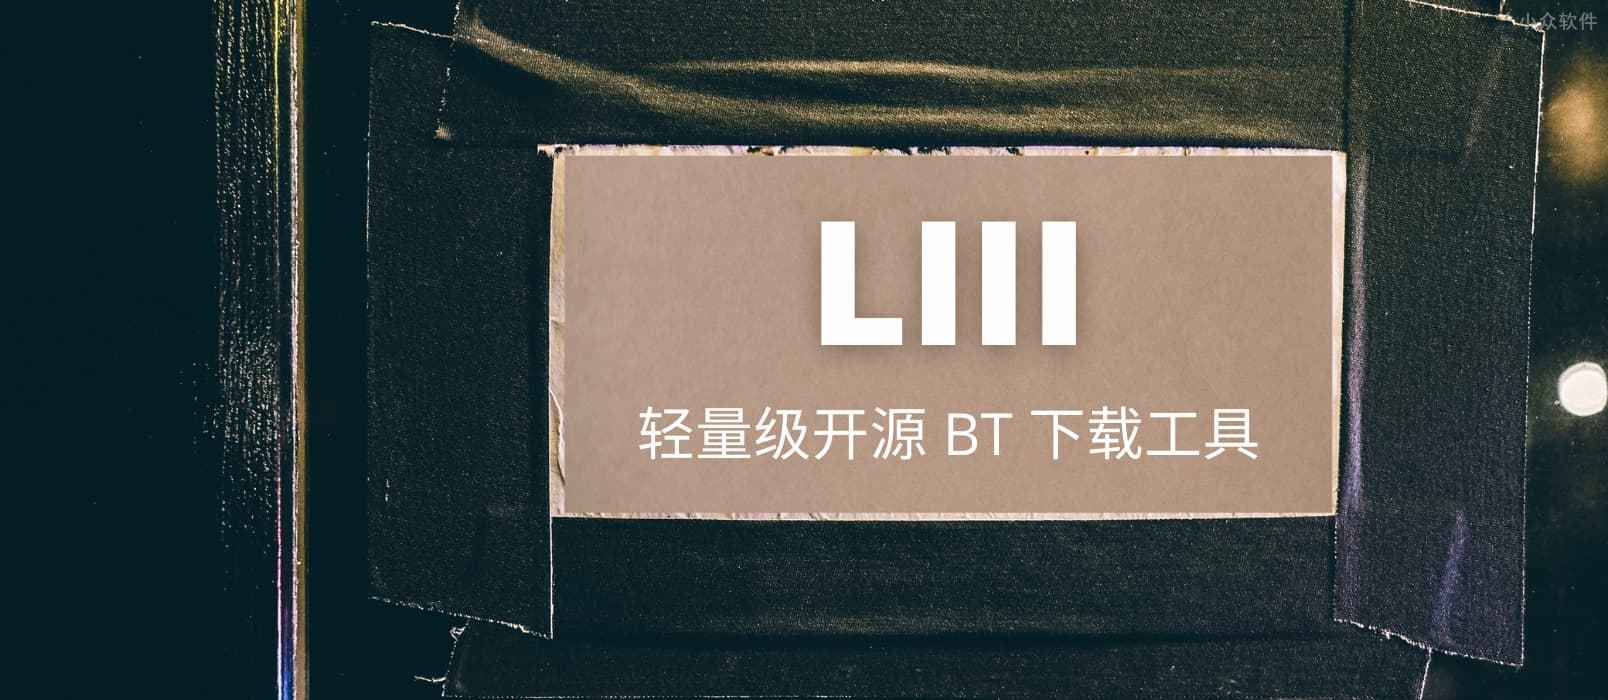 LIII BitTorrent Client - 轻量级开源 BT 下载工具[Windows] 1